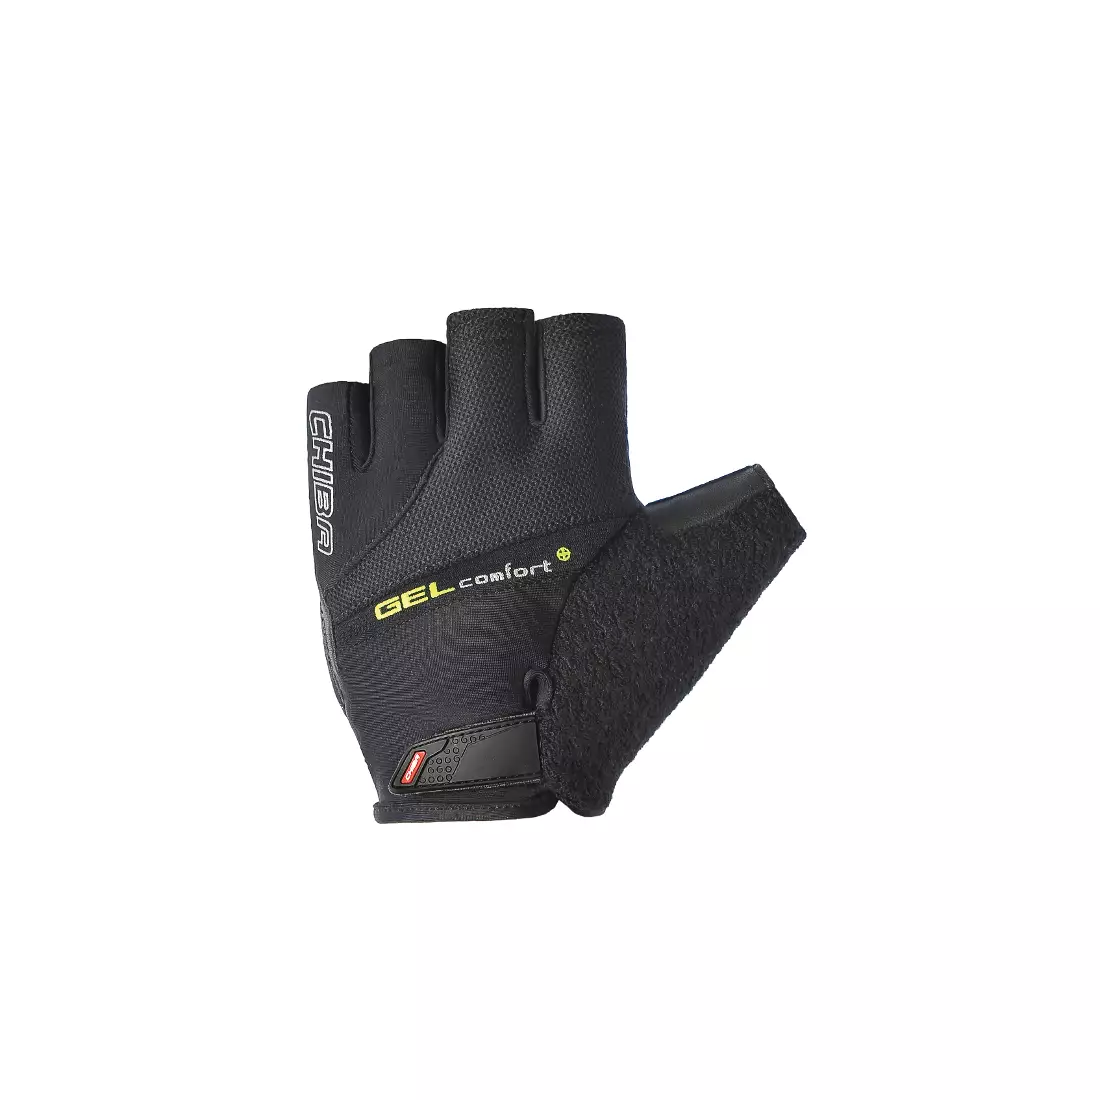 CHIBA GEL COMFORT PLUS cycling gloves, black